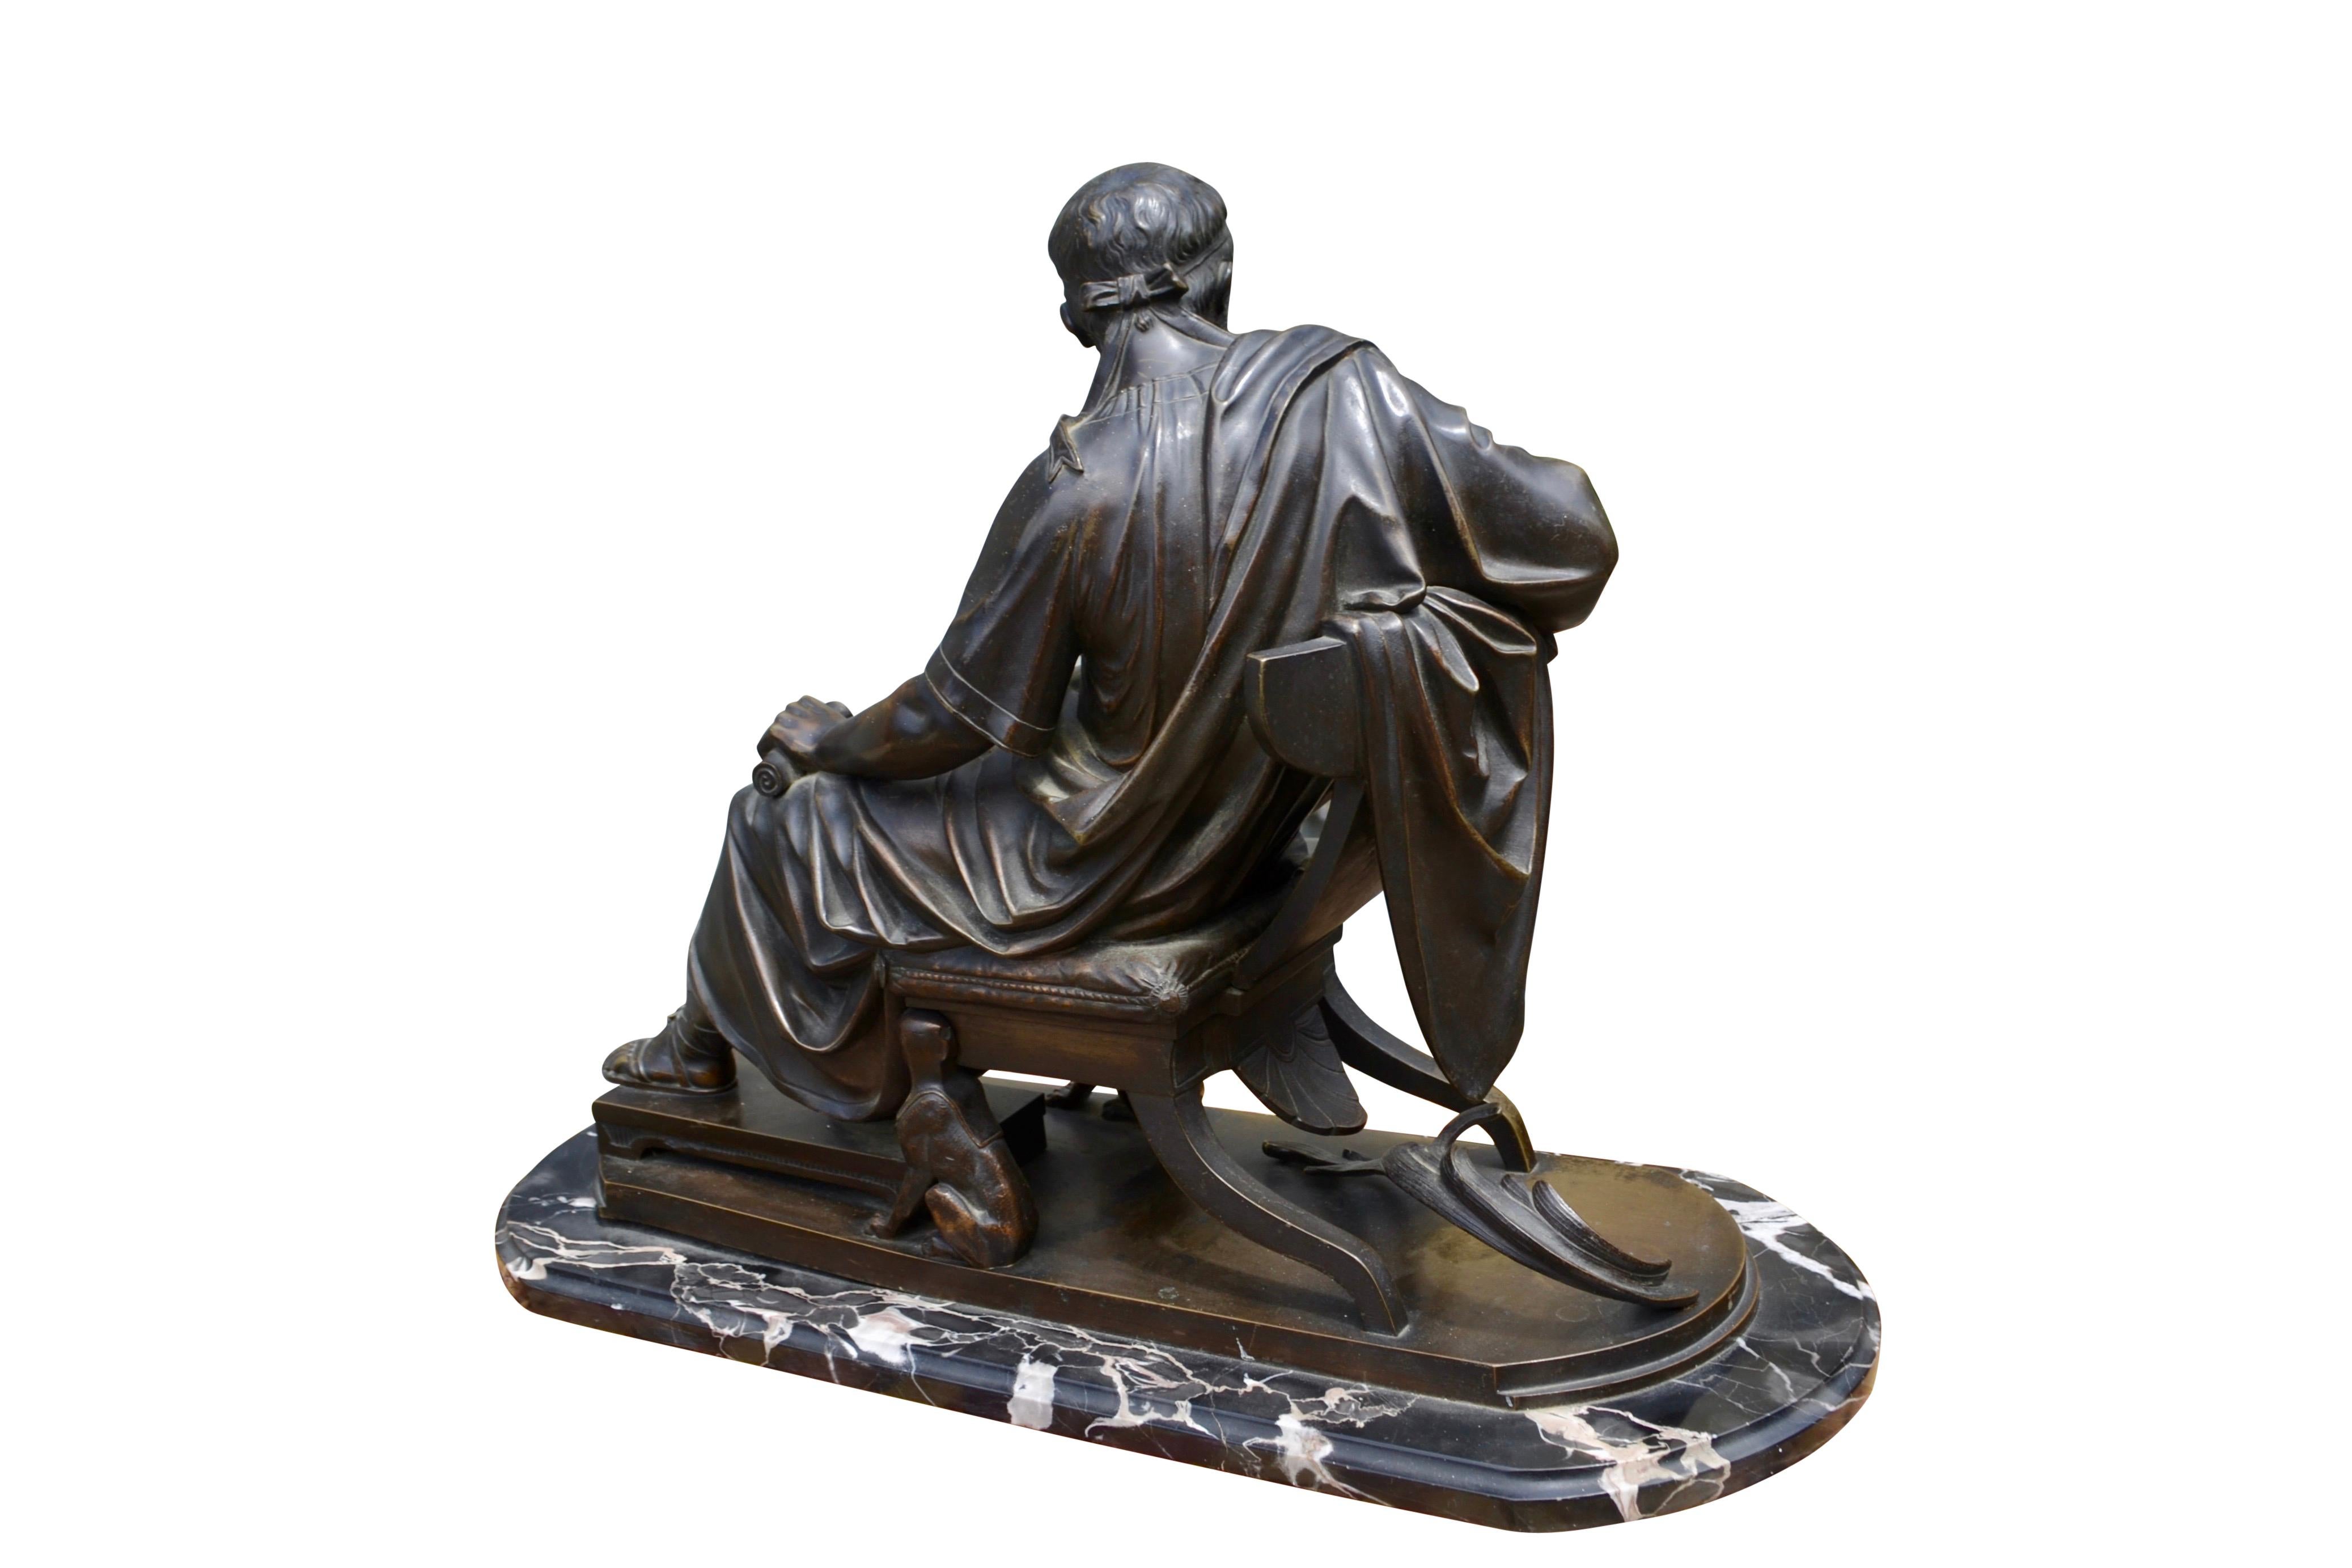 19th Century Patinated Bronze Grand Tour Statue of a Seated Roman Senator or Philosopher